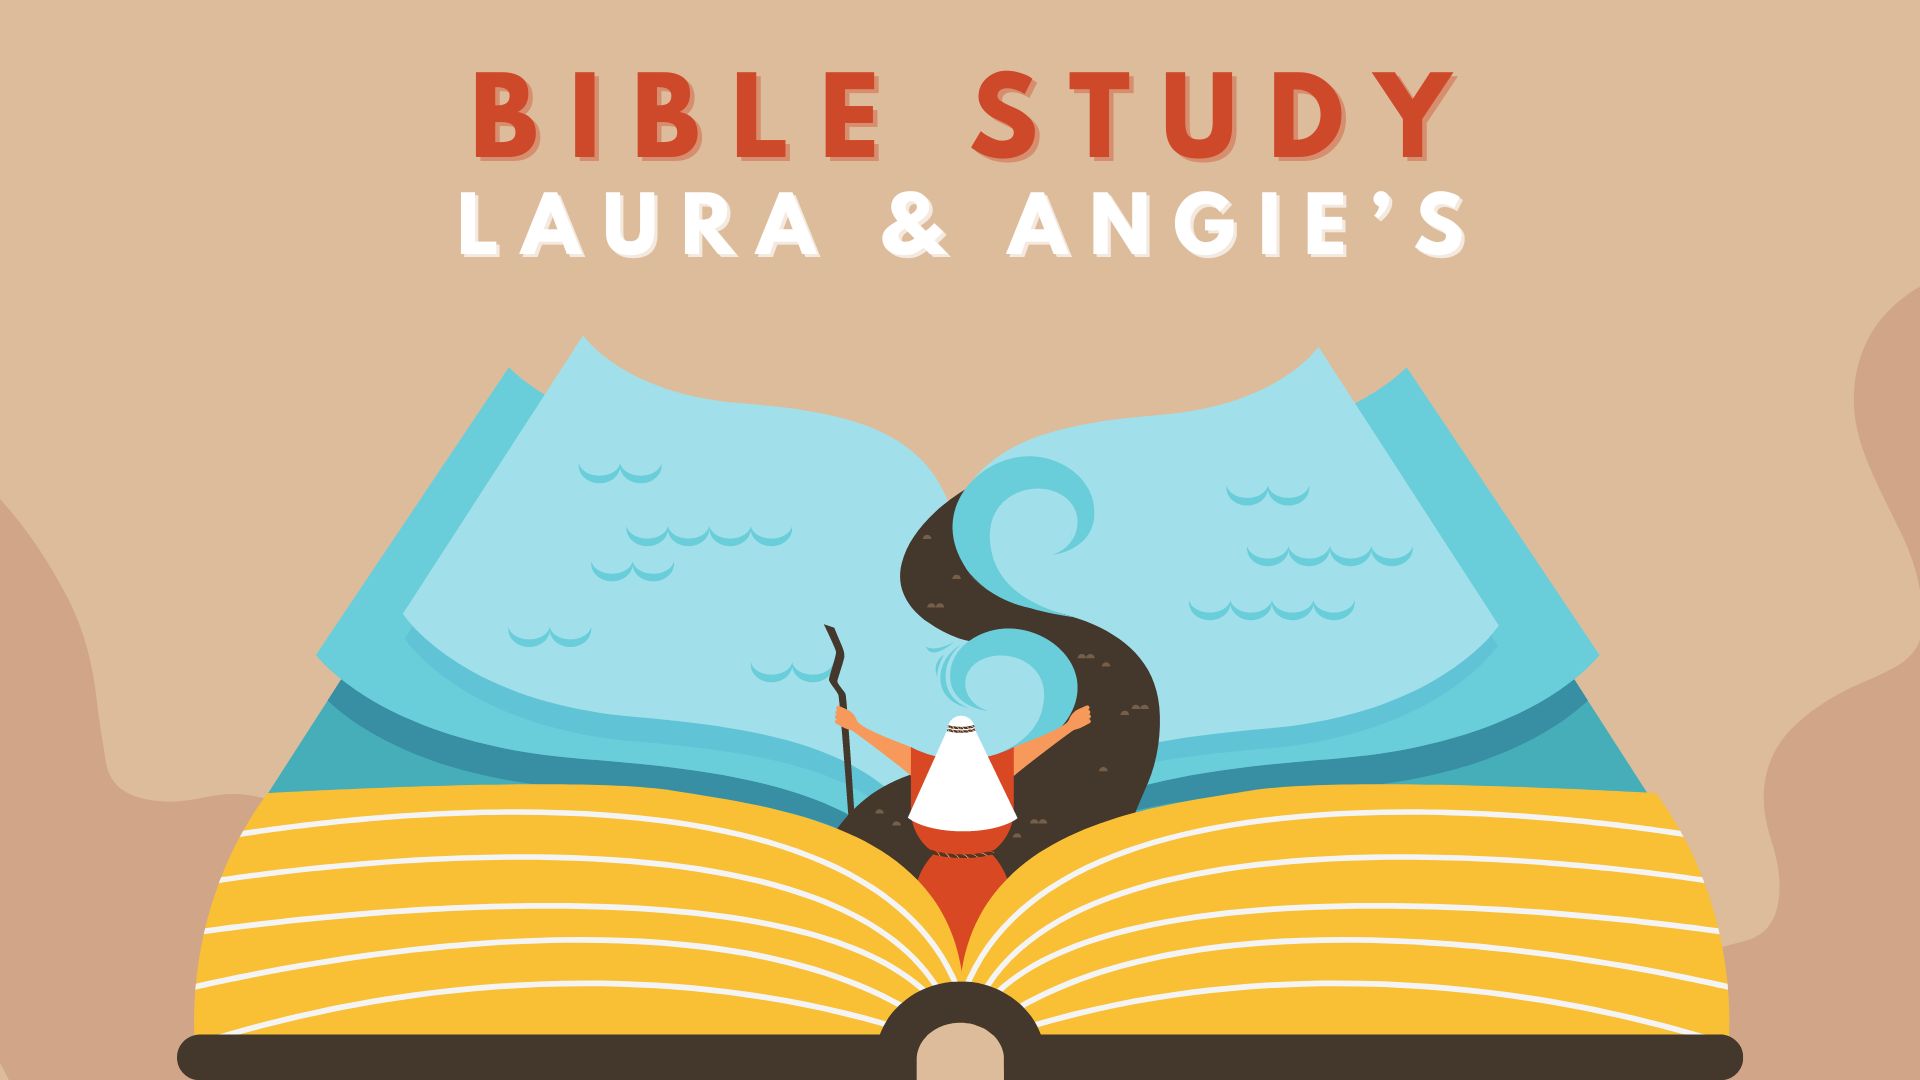 Laura & Angie's Bible Study, Sunset Church, Springfield MO